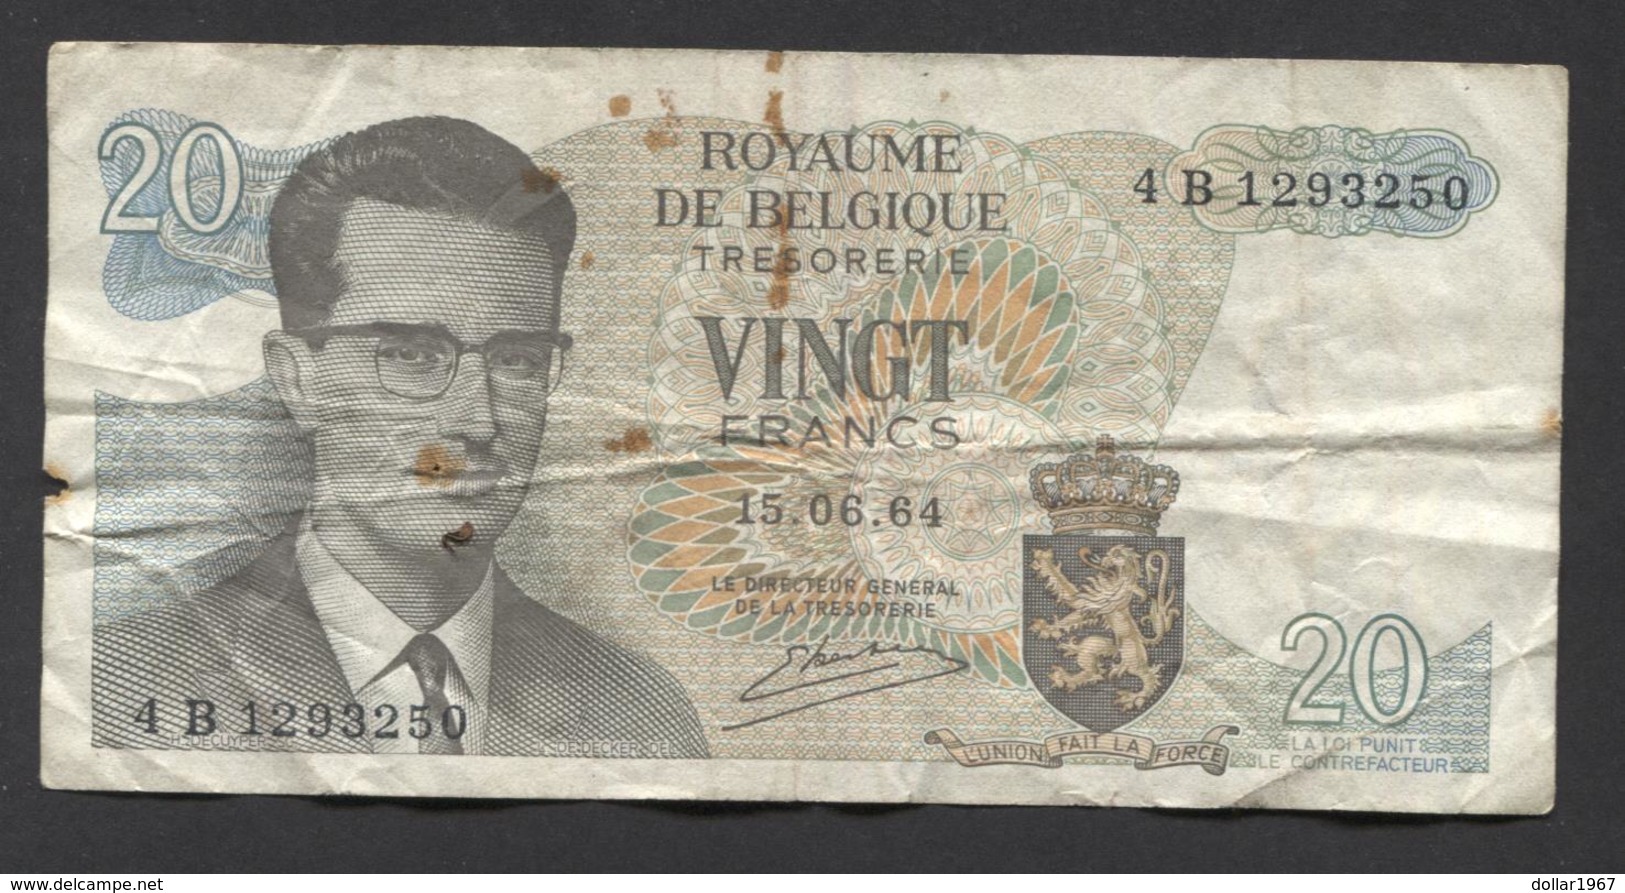 België Belgique Belgium 15 06 1964 -  20 Francs Atomium Baudouin. 4 B 1293250 - 20 Francs